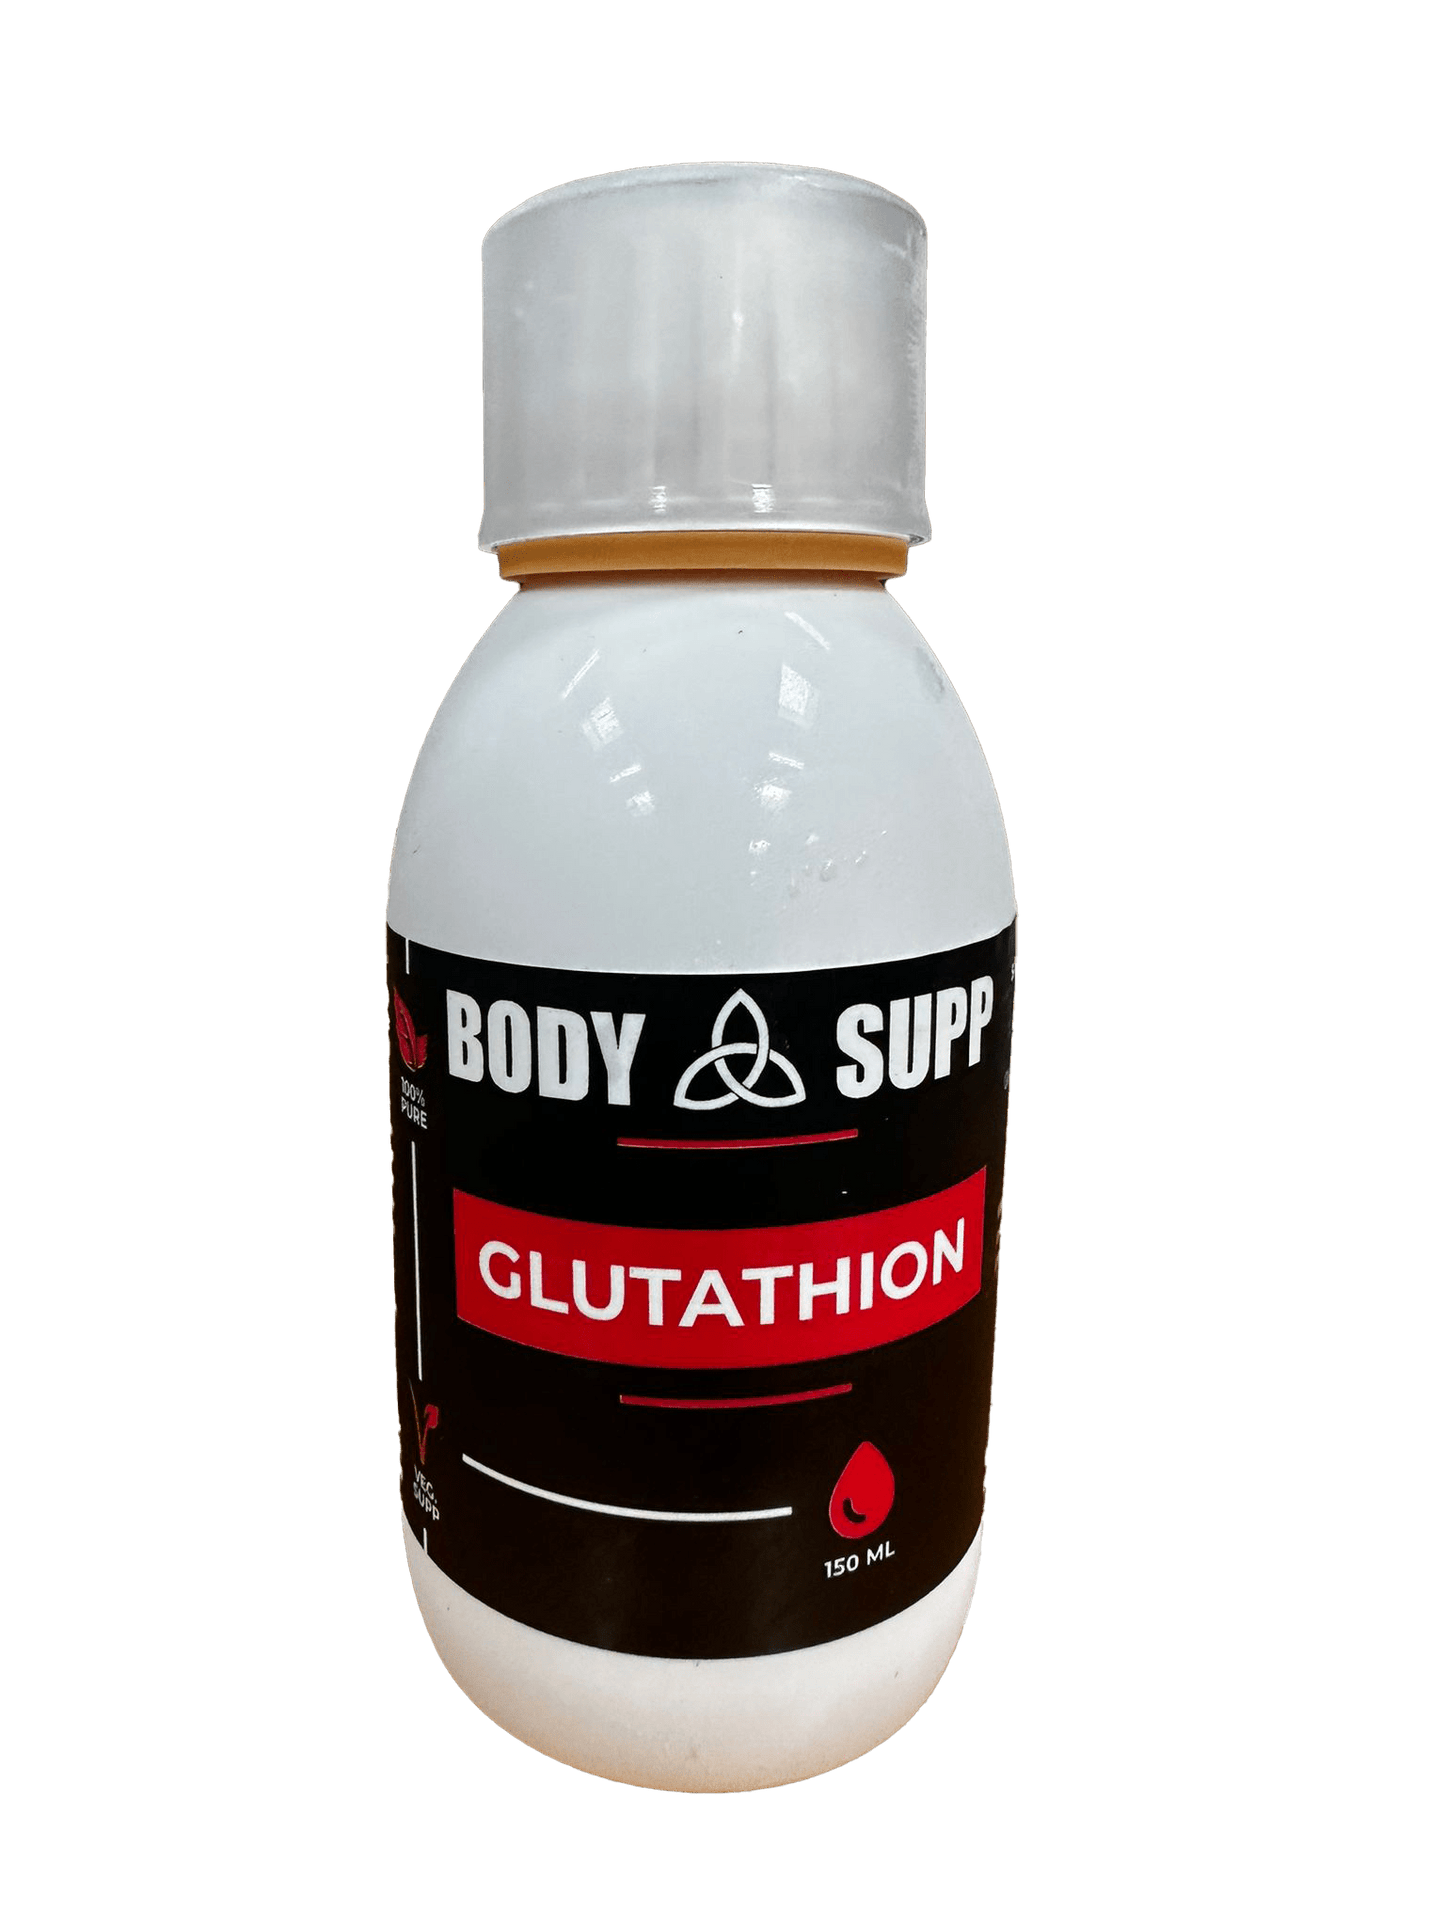 Gluthation